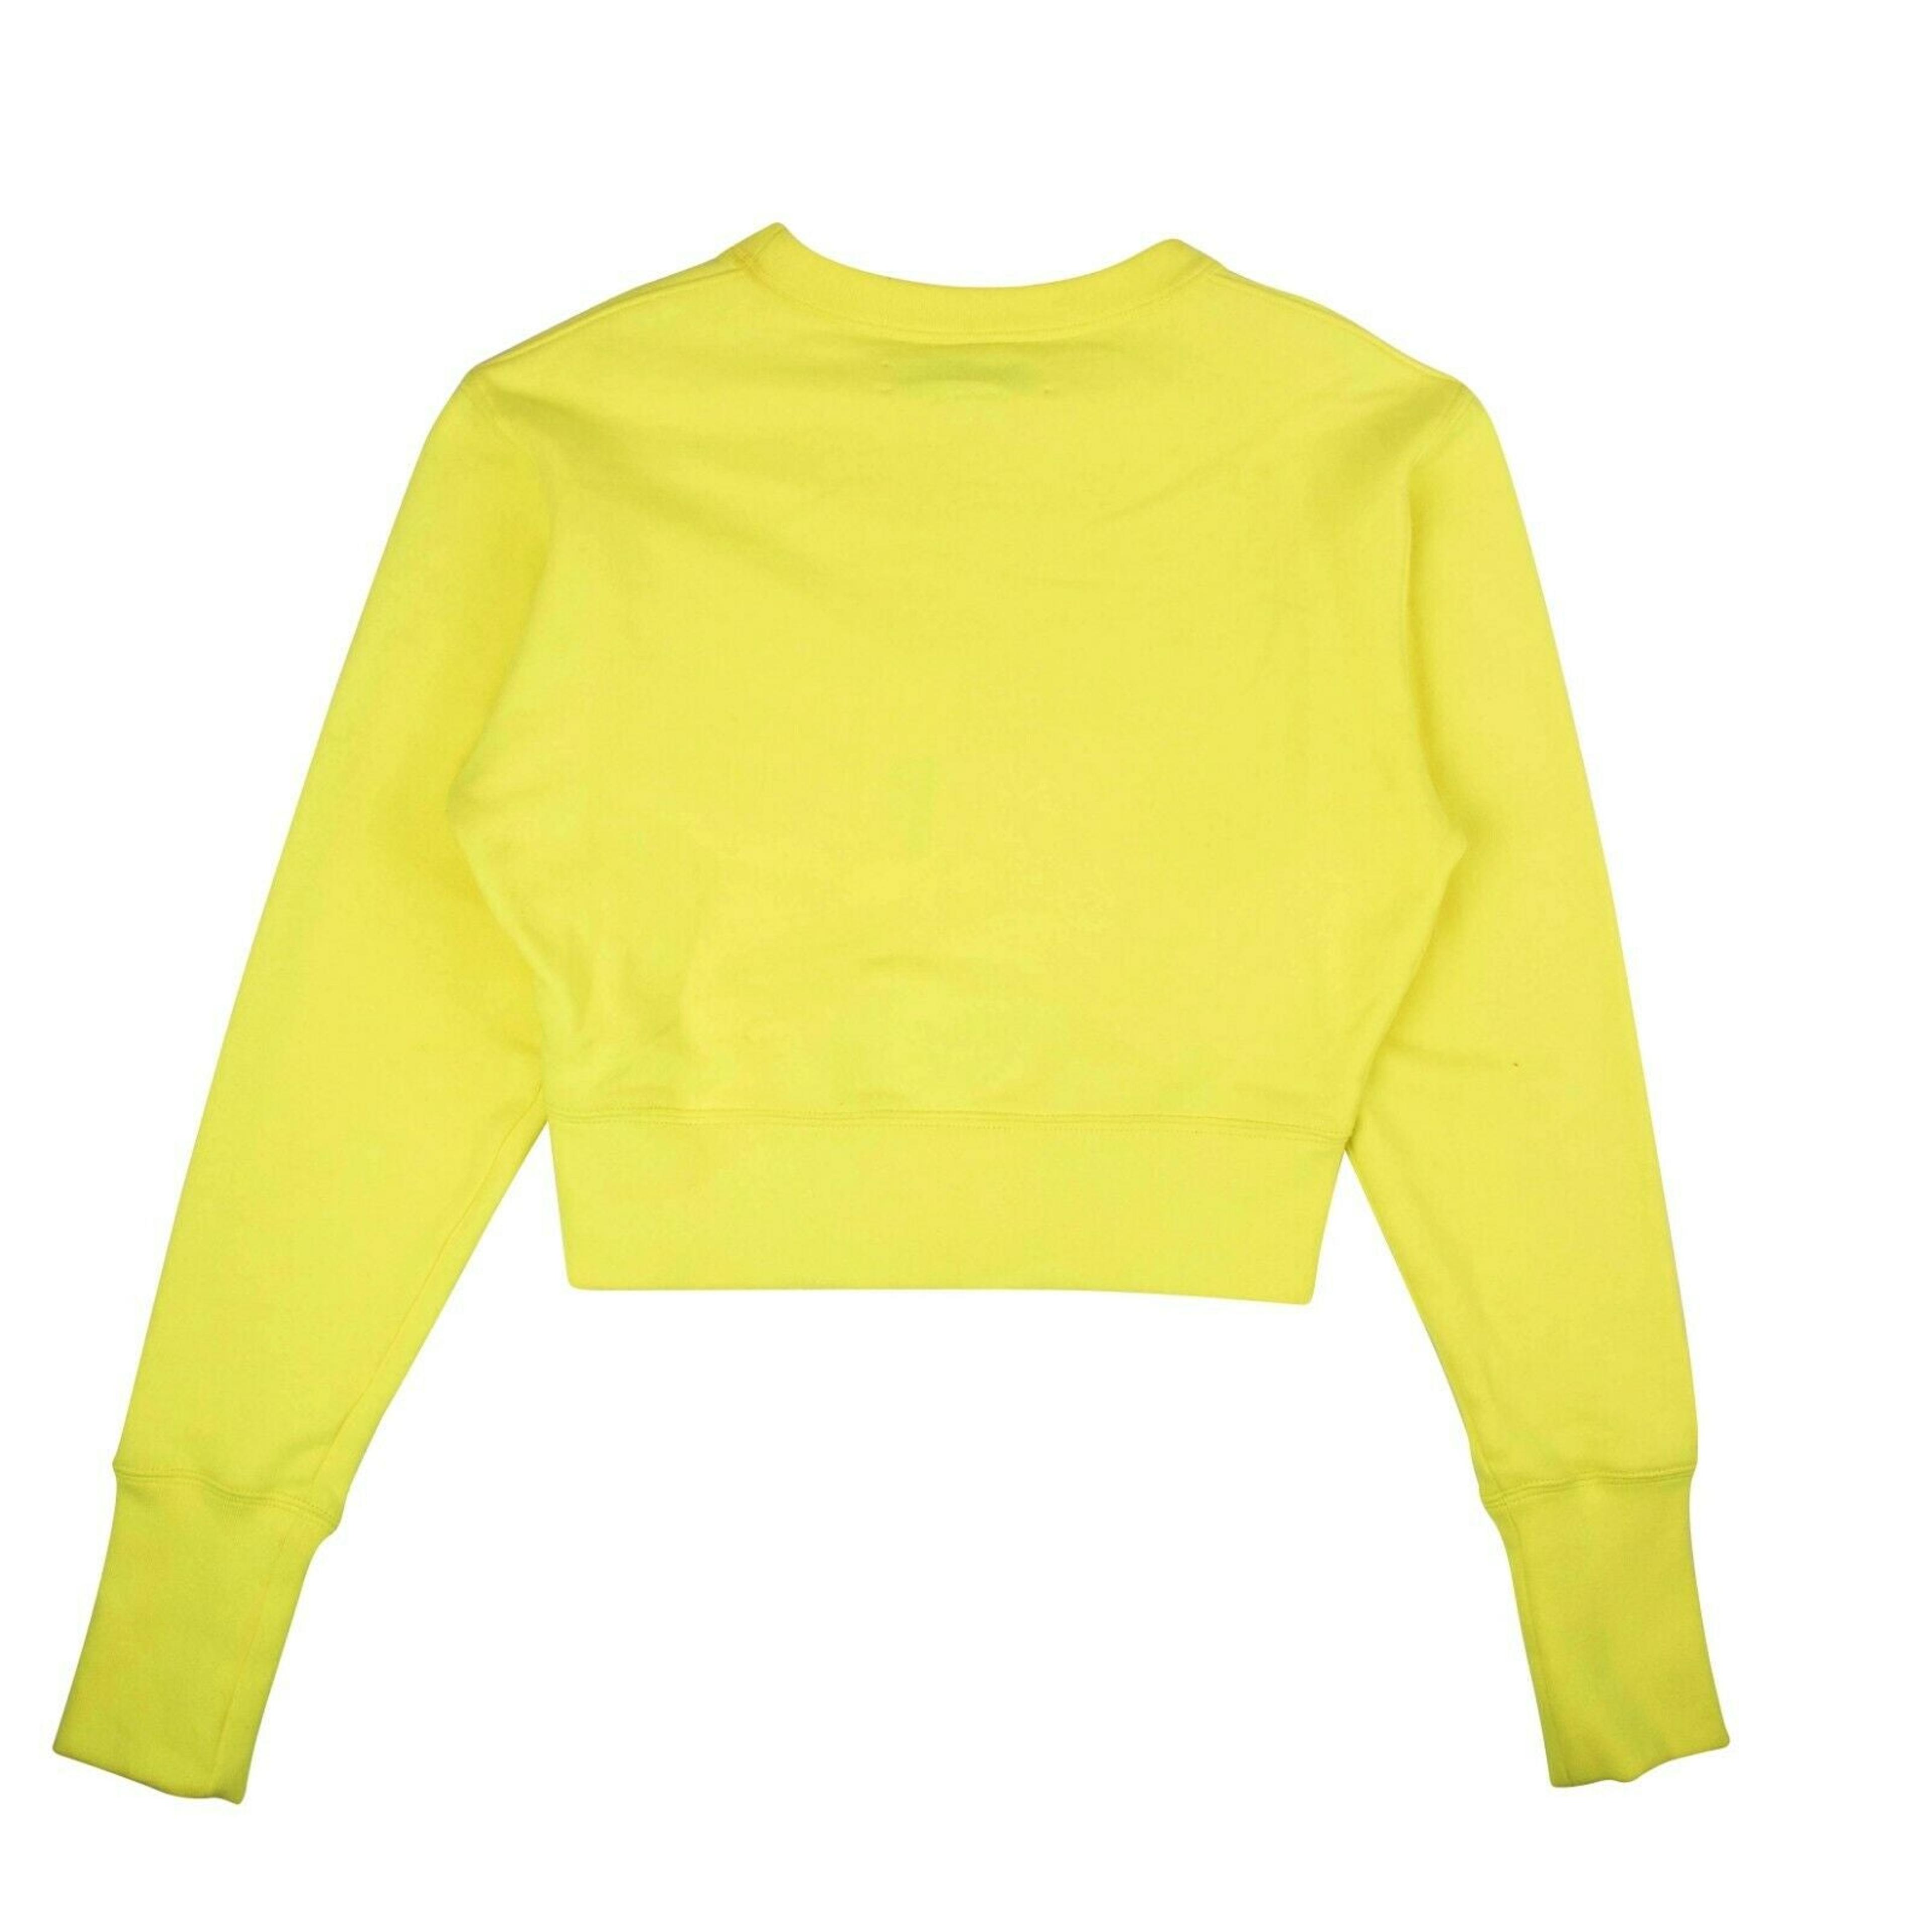 Alternate View 1 of Neon Yellow Cropped Crewneck Sweatshirt